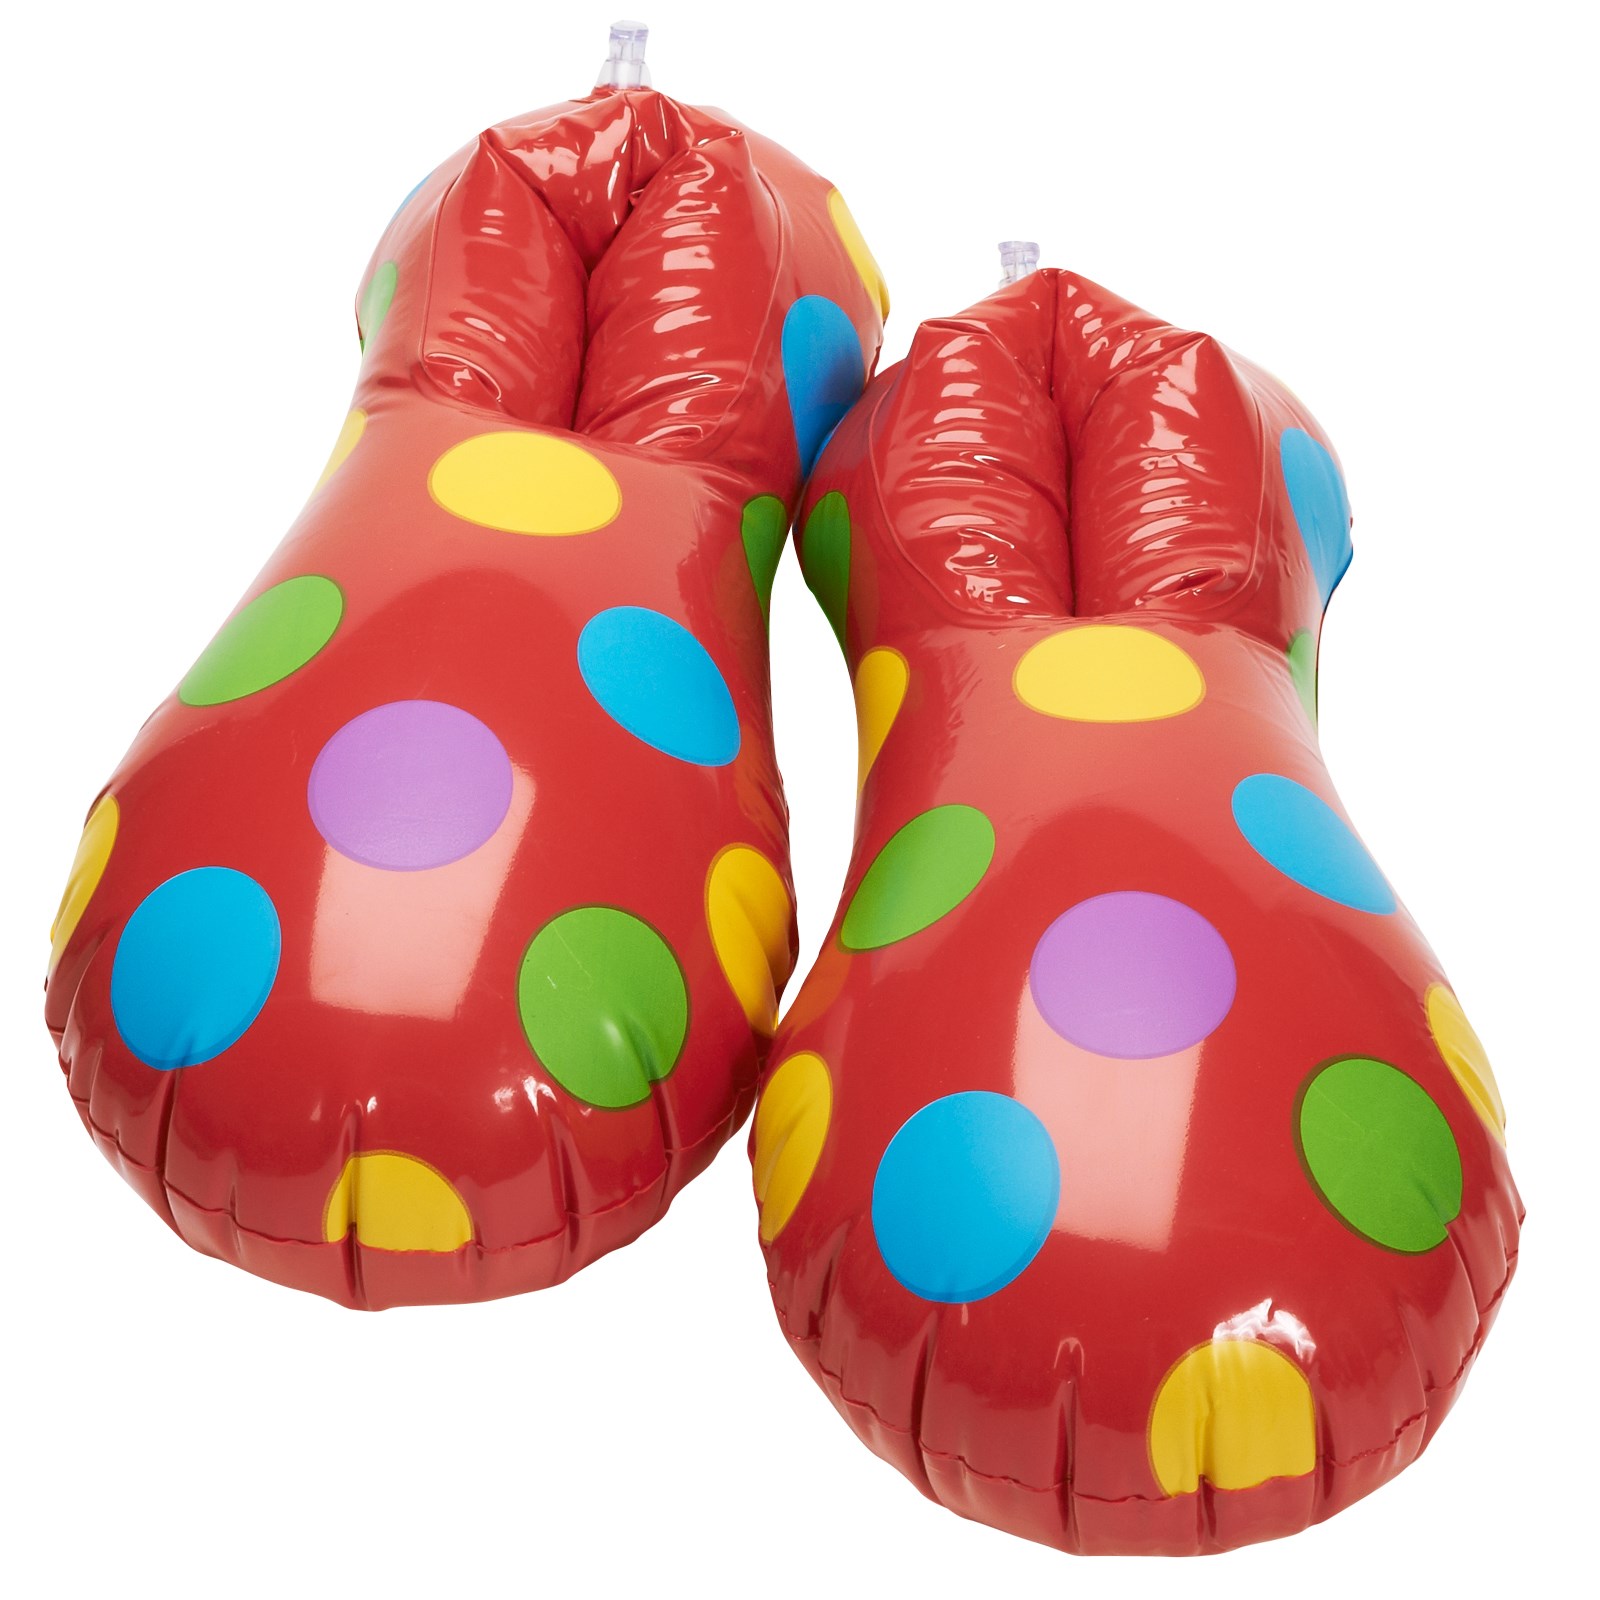 Inflatable Clown Shoes | BirthdayExpress.com